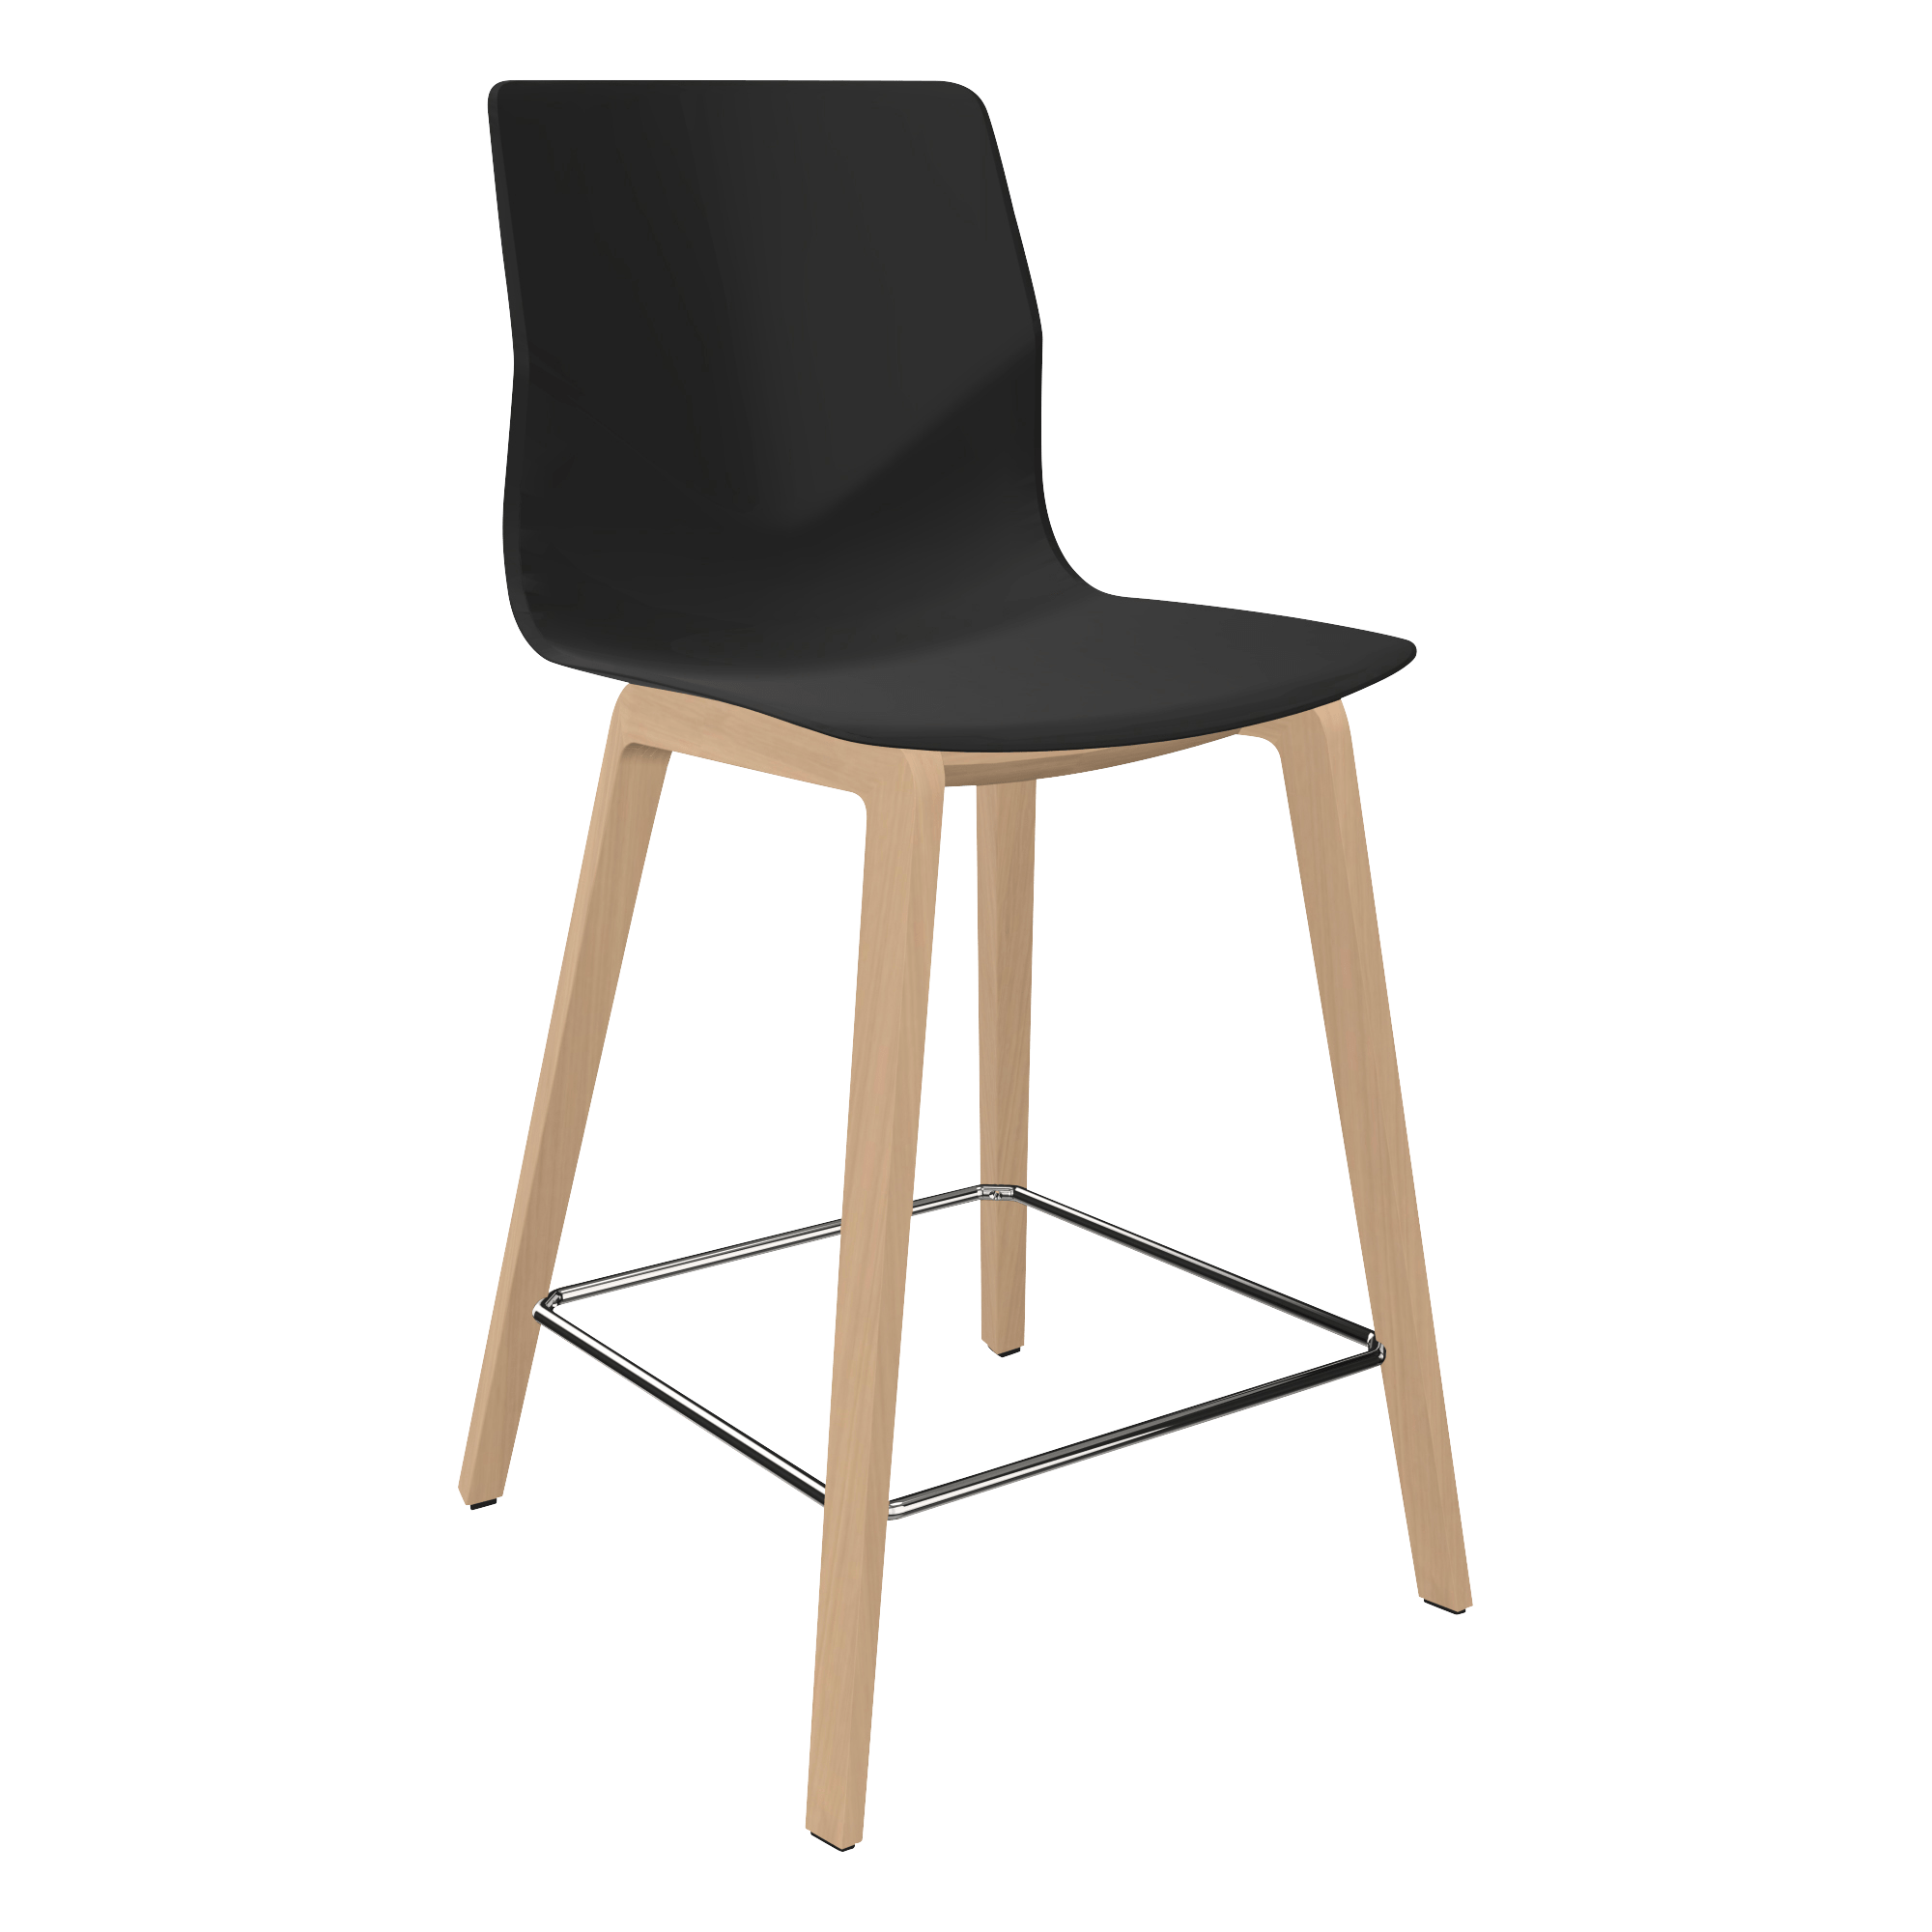 designer desk chair with wooden legs